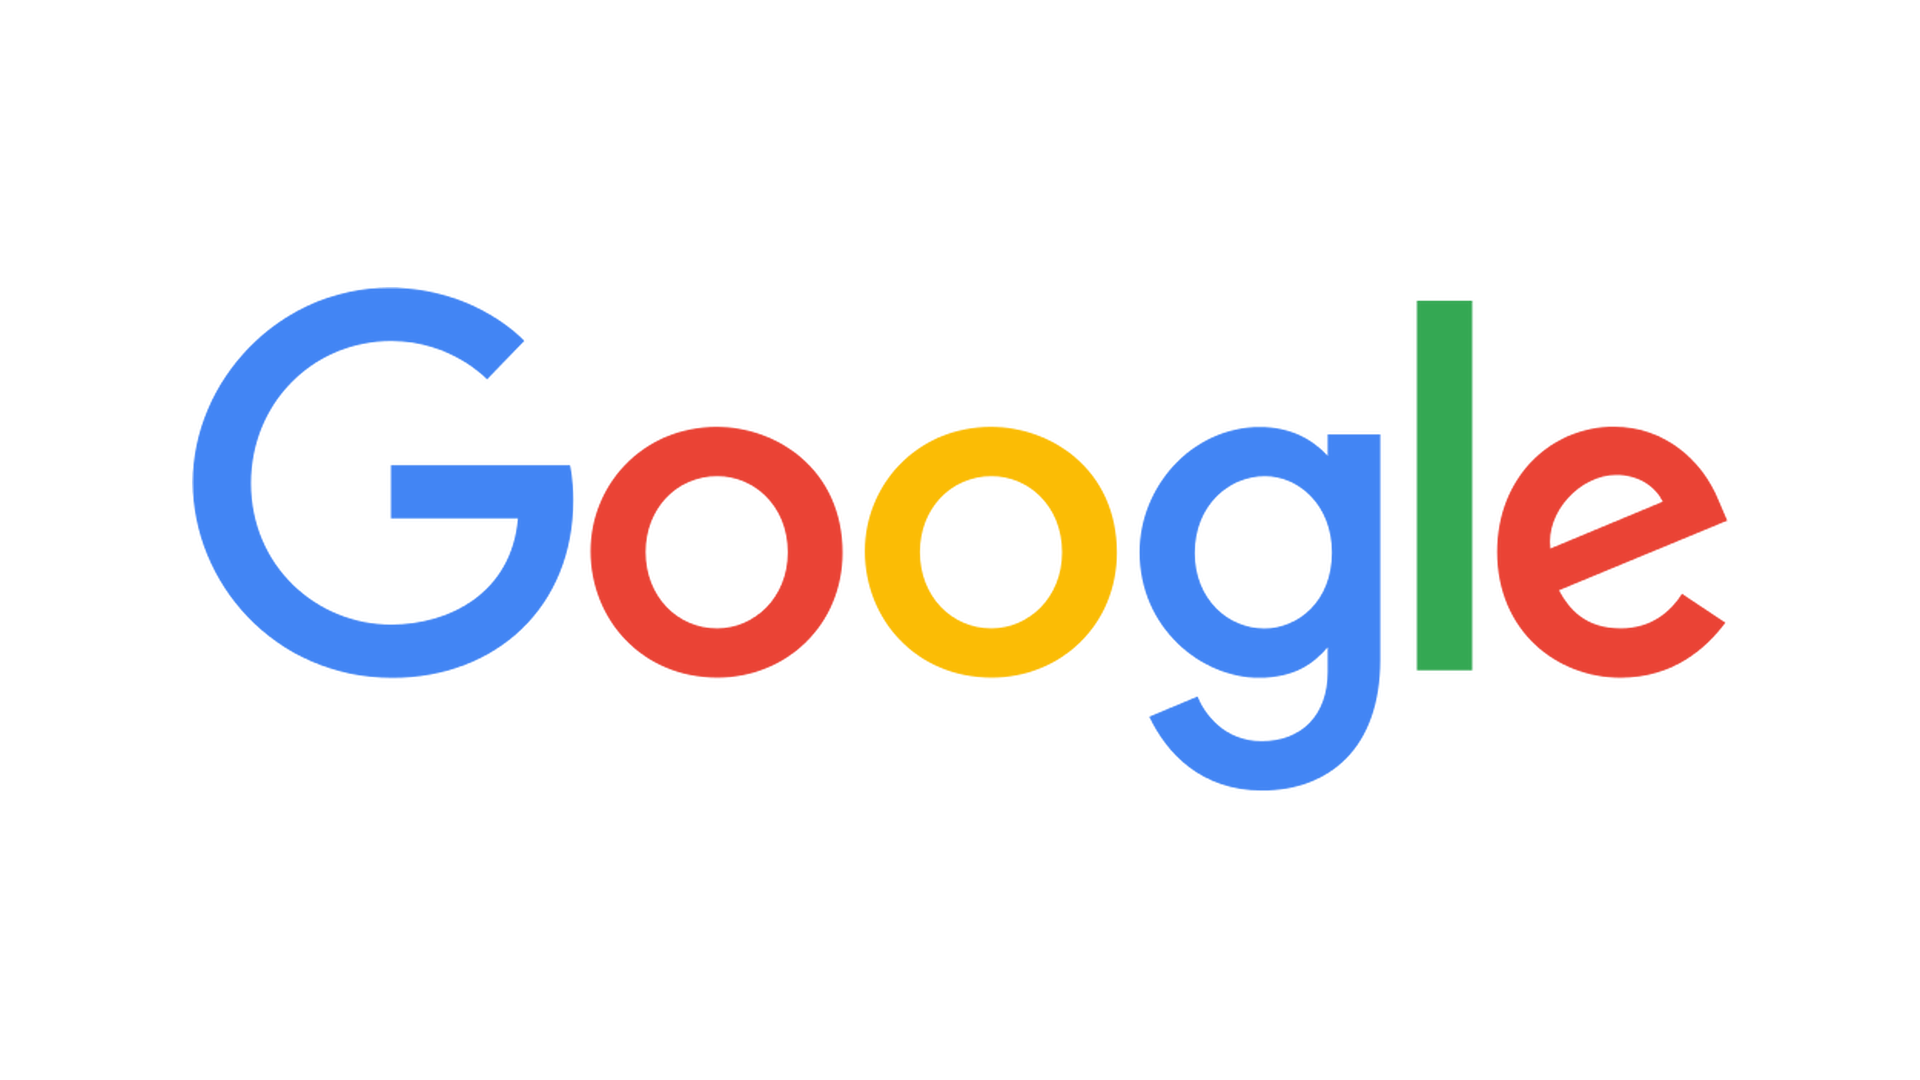 Goo gl com. Гугл. Google Alerts. Картинки логотипа гугл.